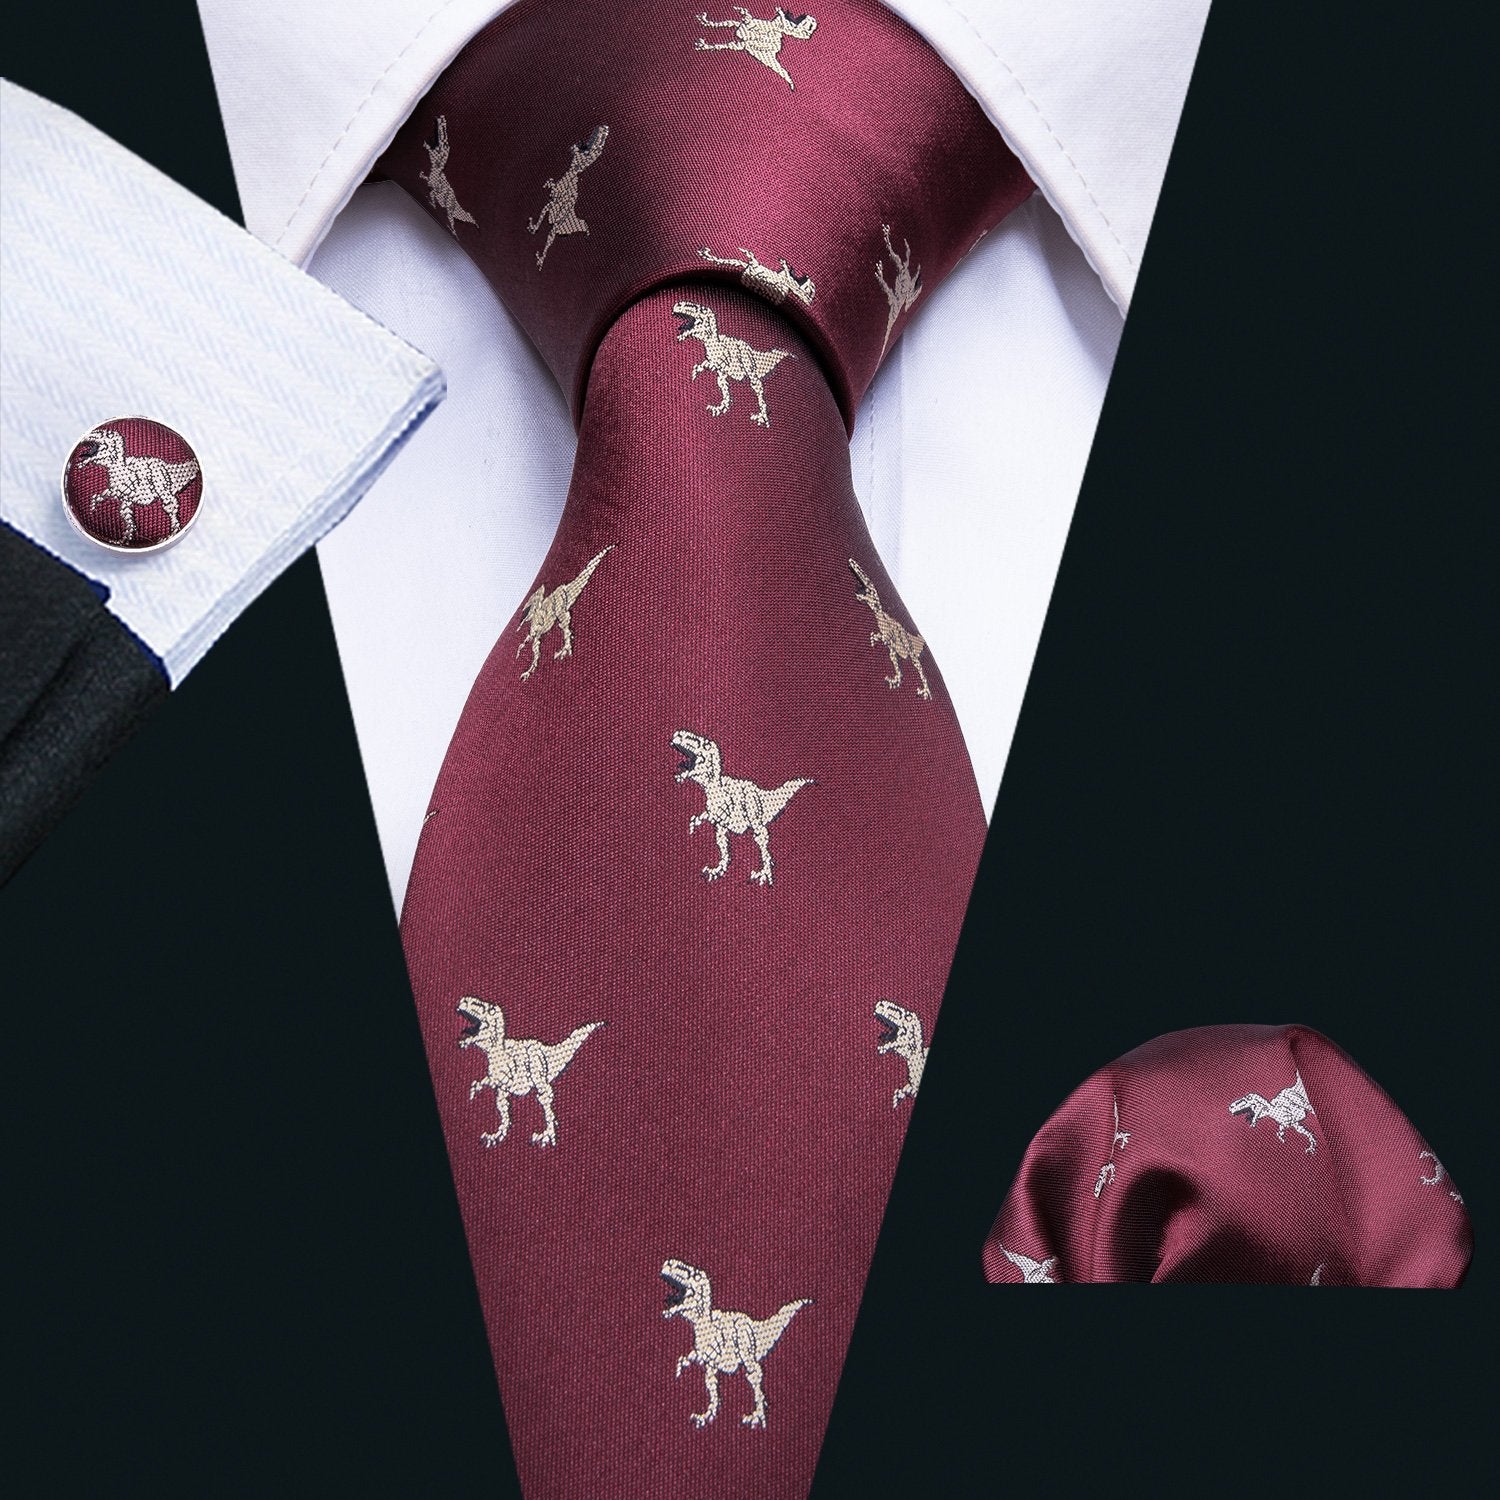 Burgundy Novelty Silk Men's Tie Hanky Cufflinks Set - barry-wang